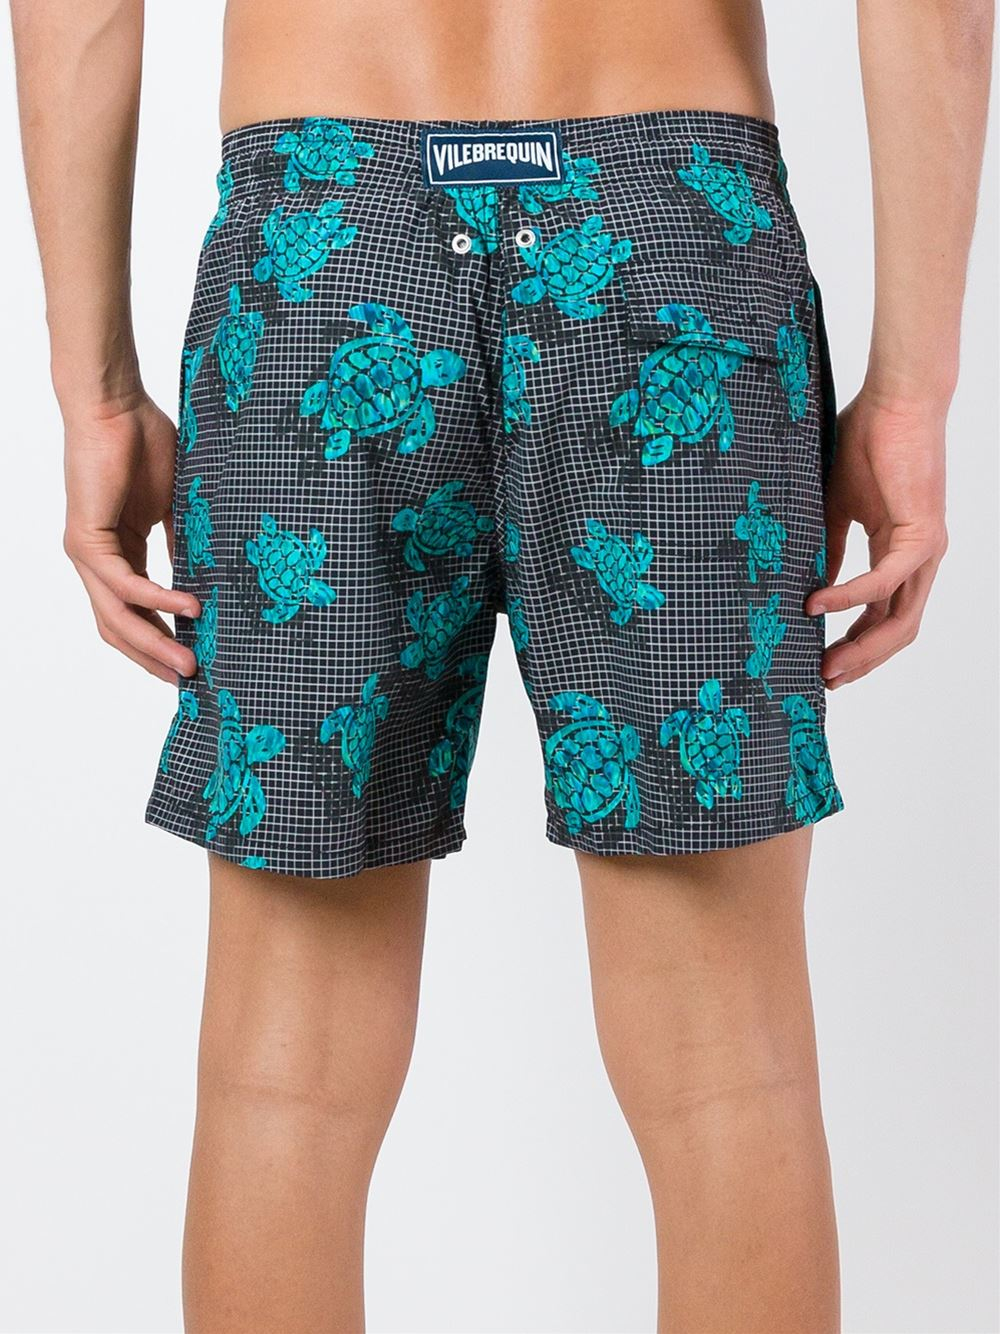 Lyst - Vilebrequin Checked Turtle Print Swim Shorts in Black for Men